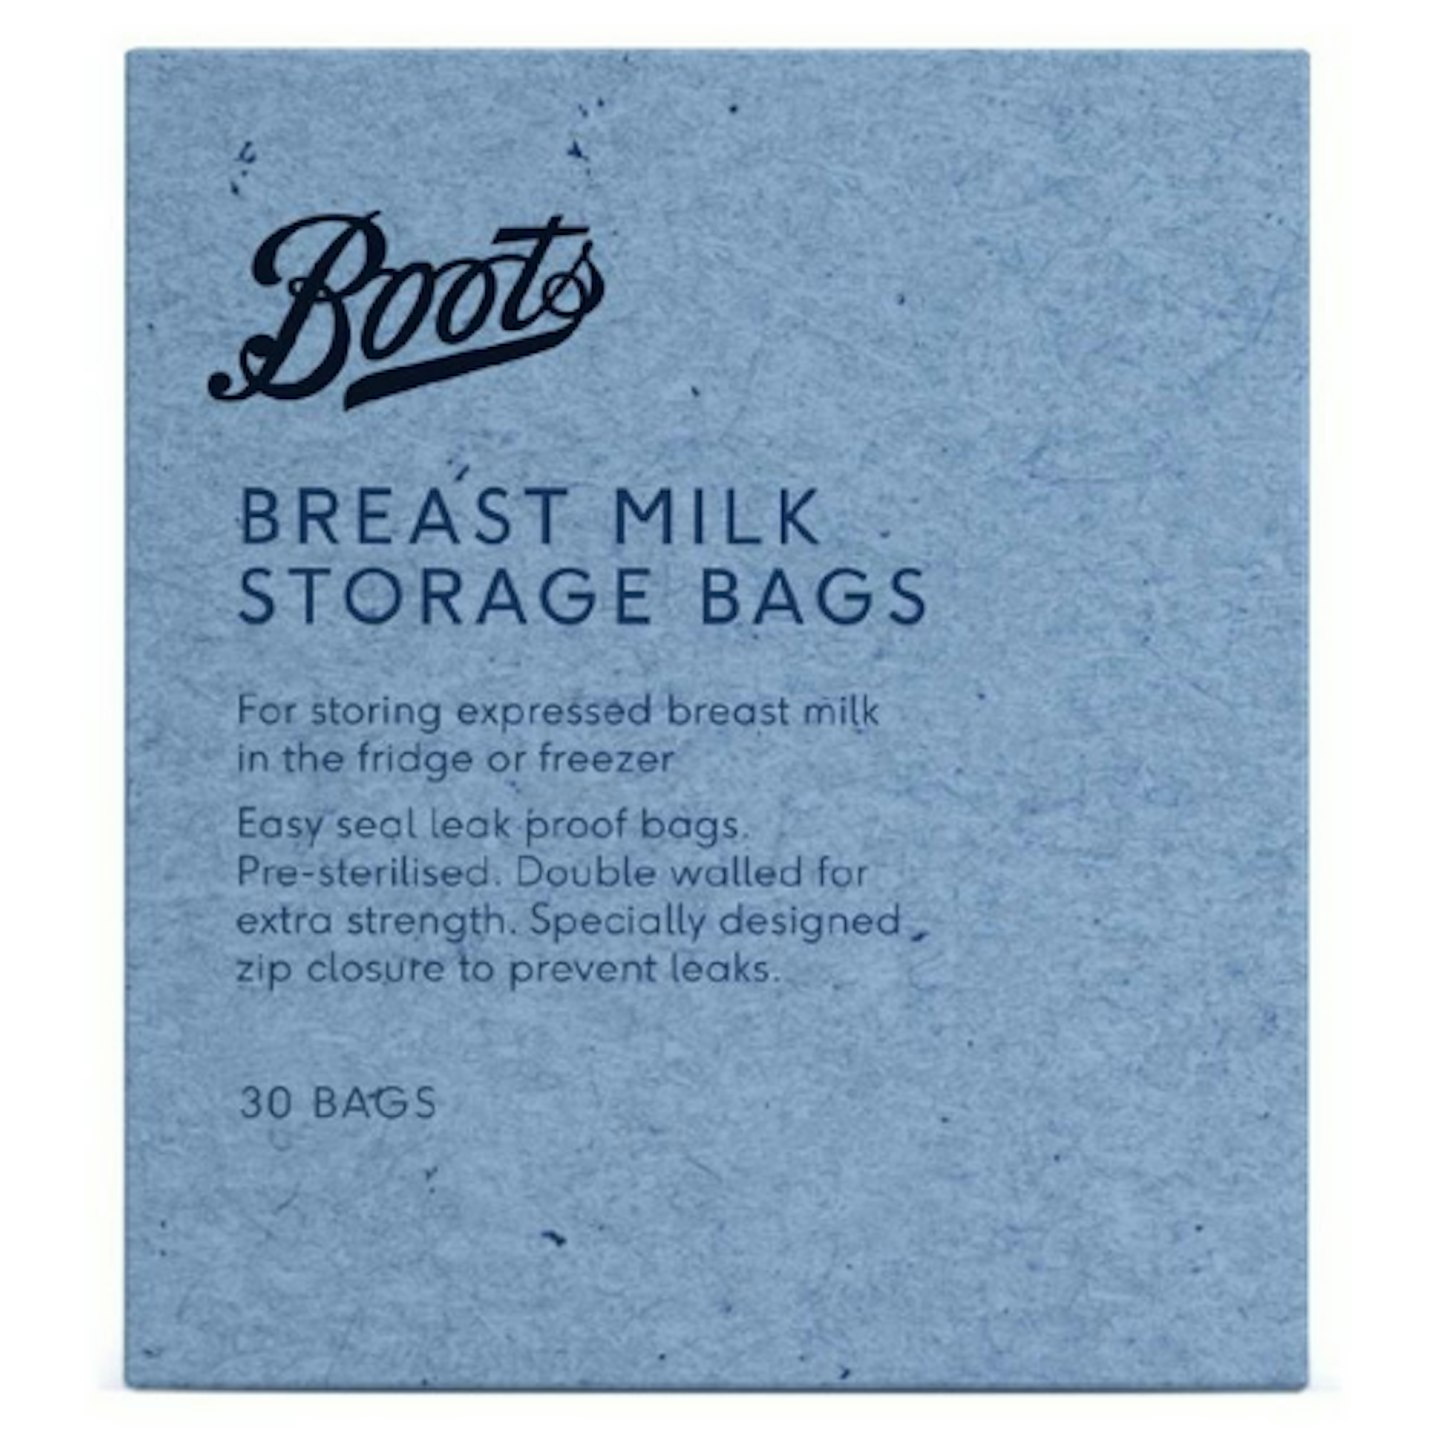 Boots Breast Milk Storage Bags 30s 